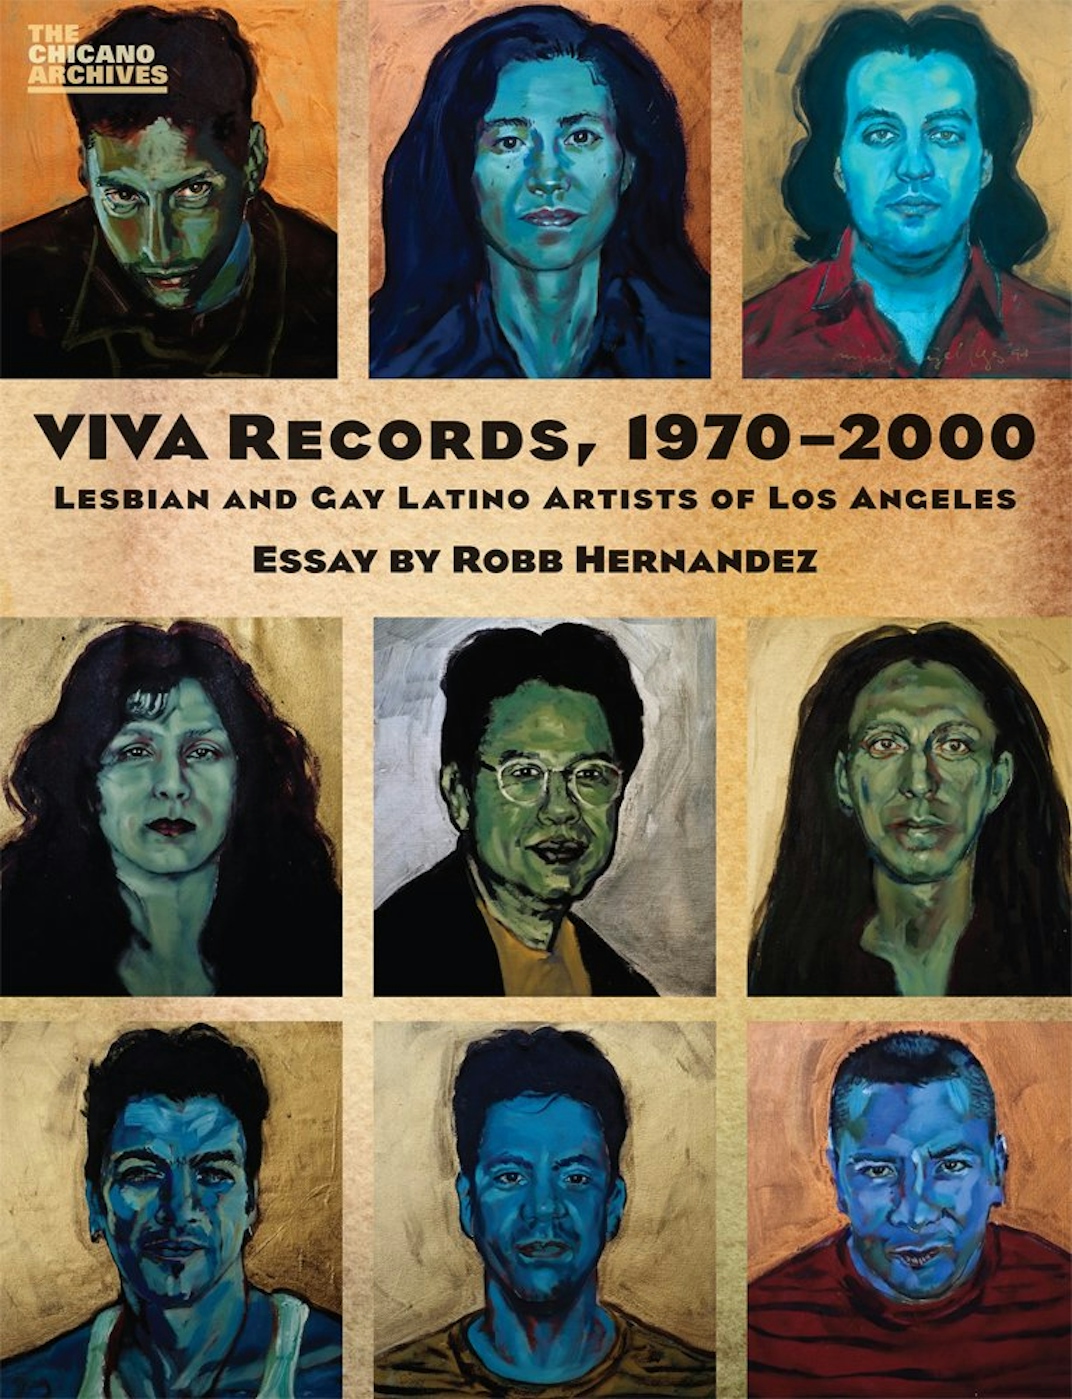 VIVA Records, 1970-2000